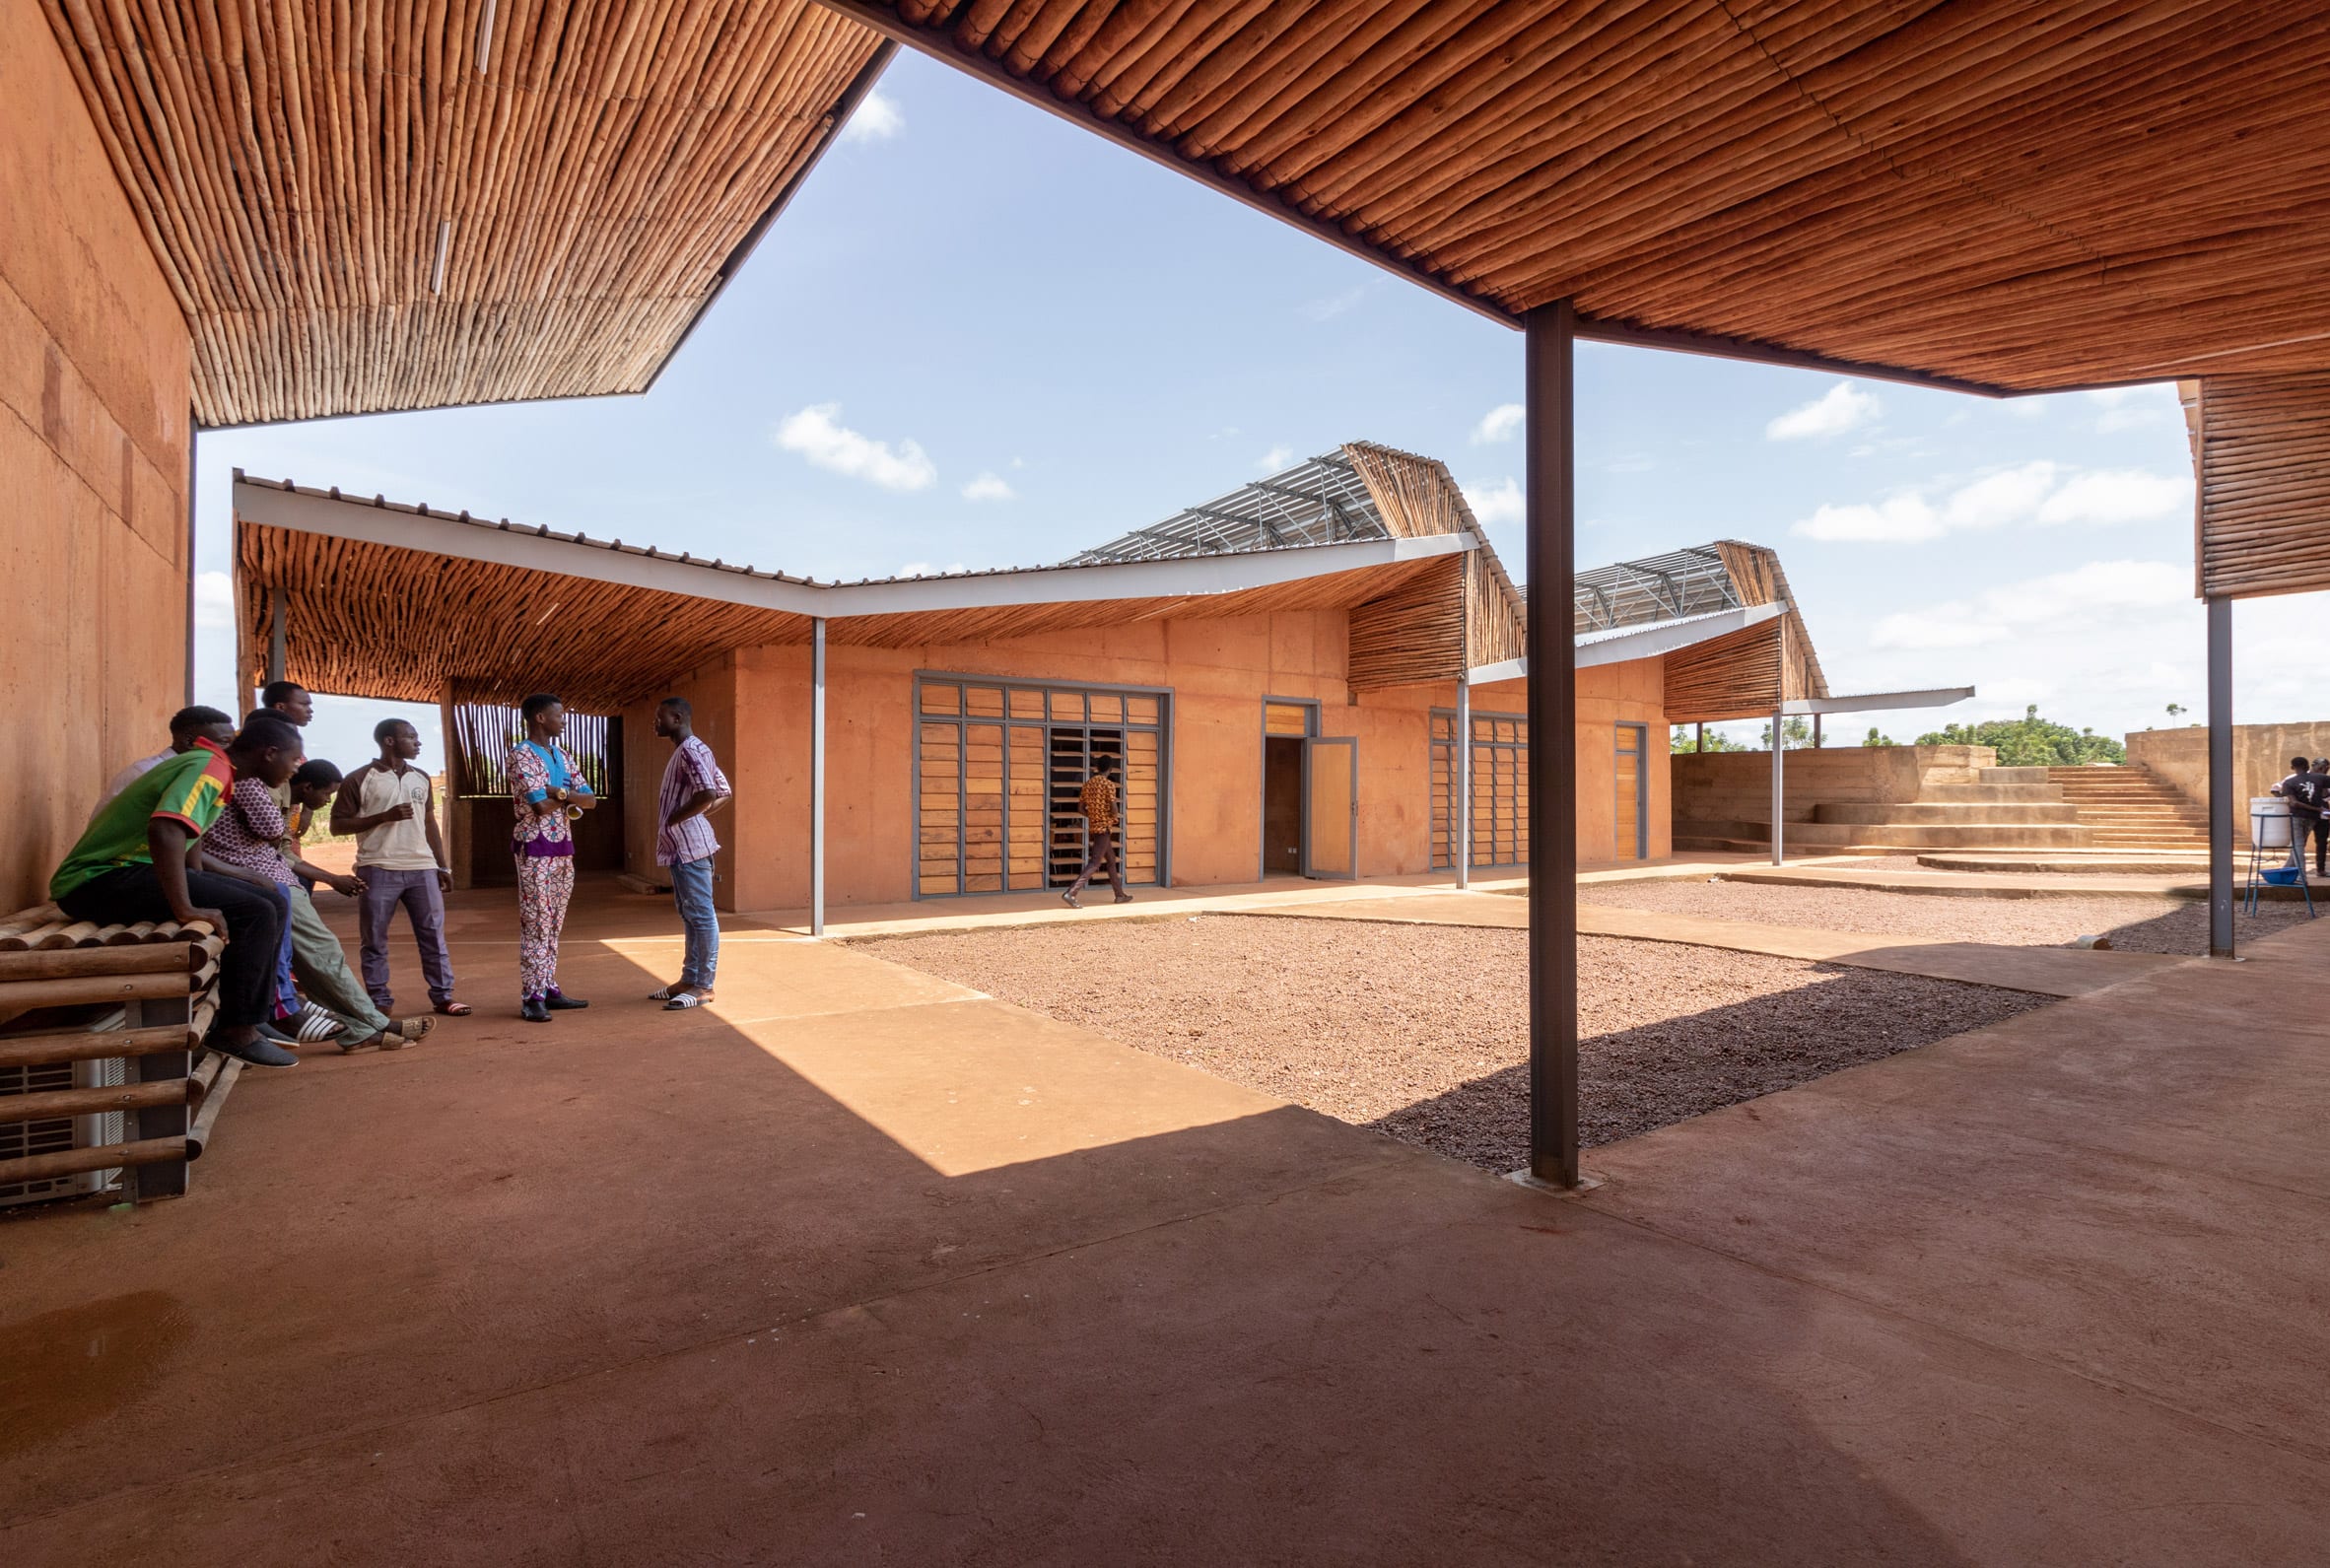 The courtyard of a university in Burkina Faso